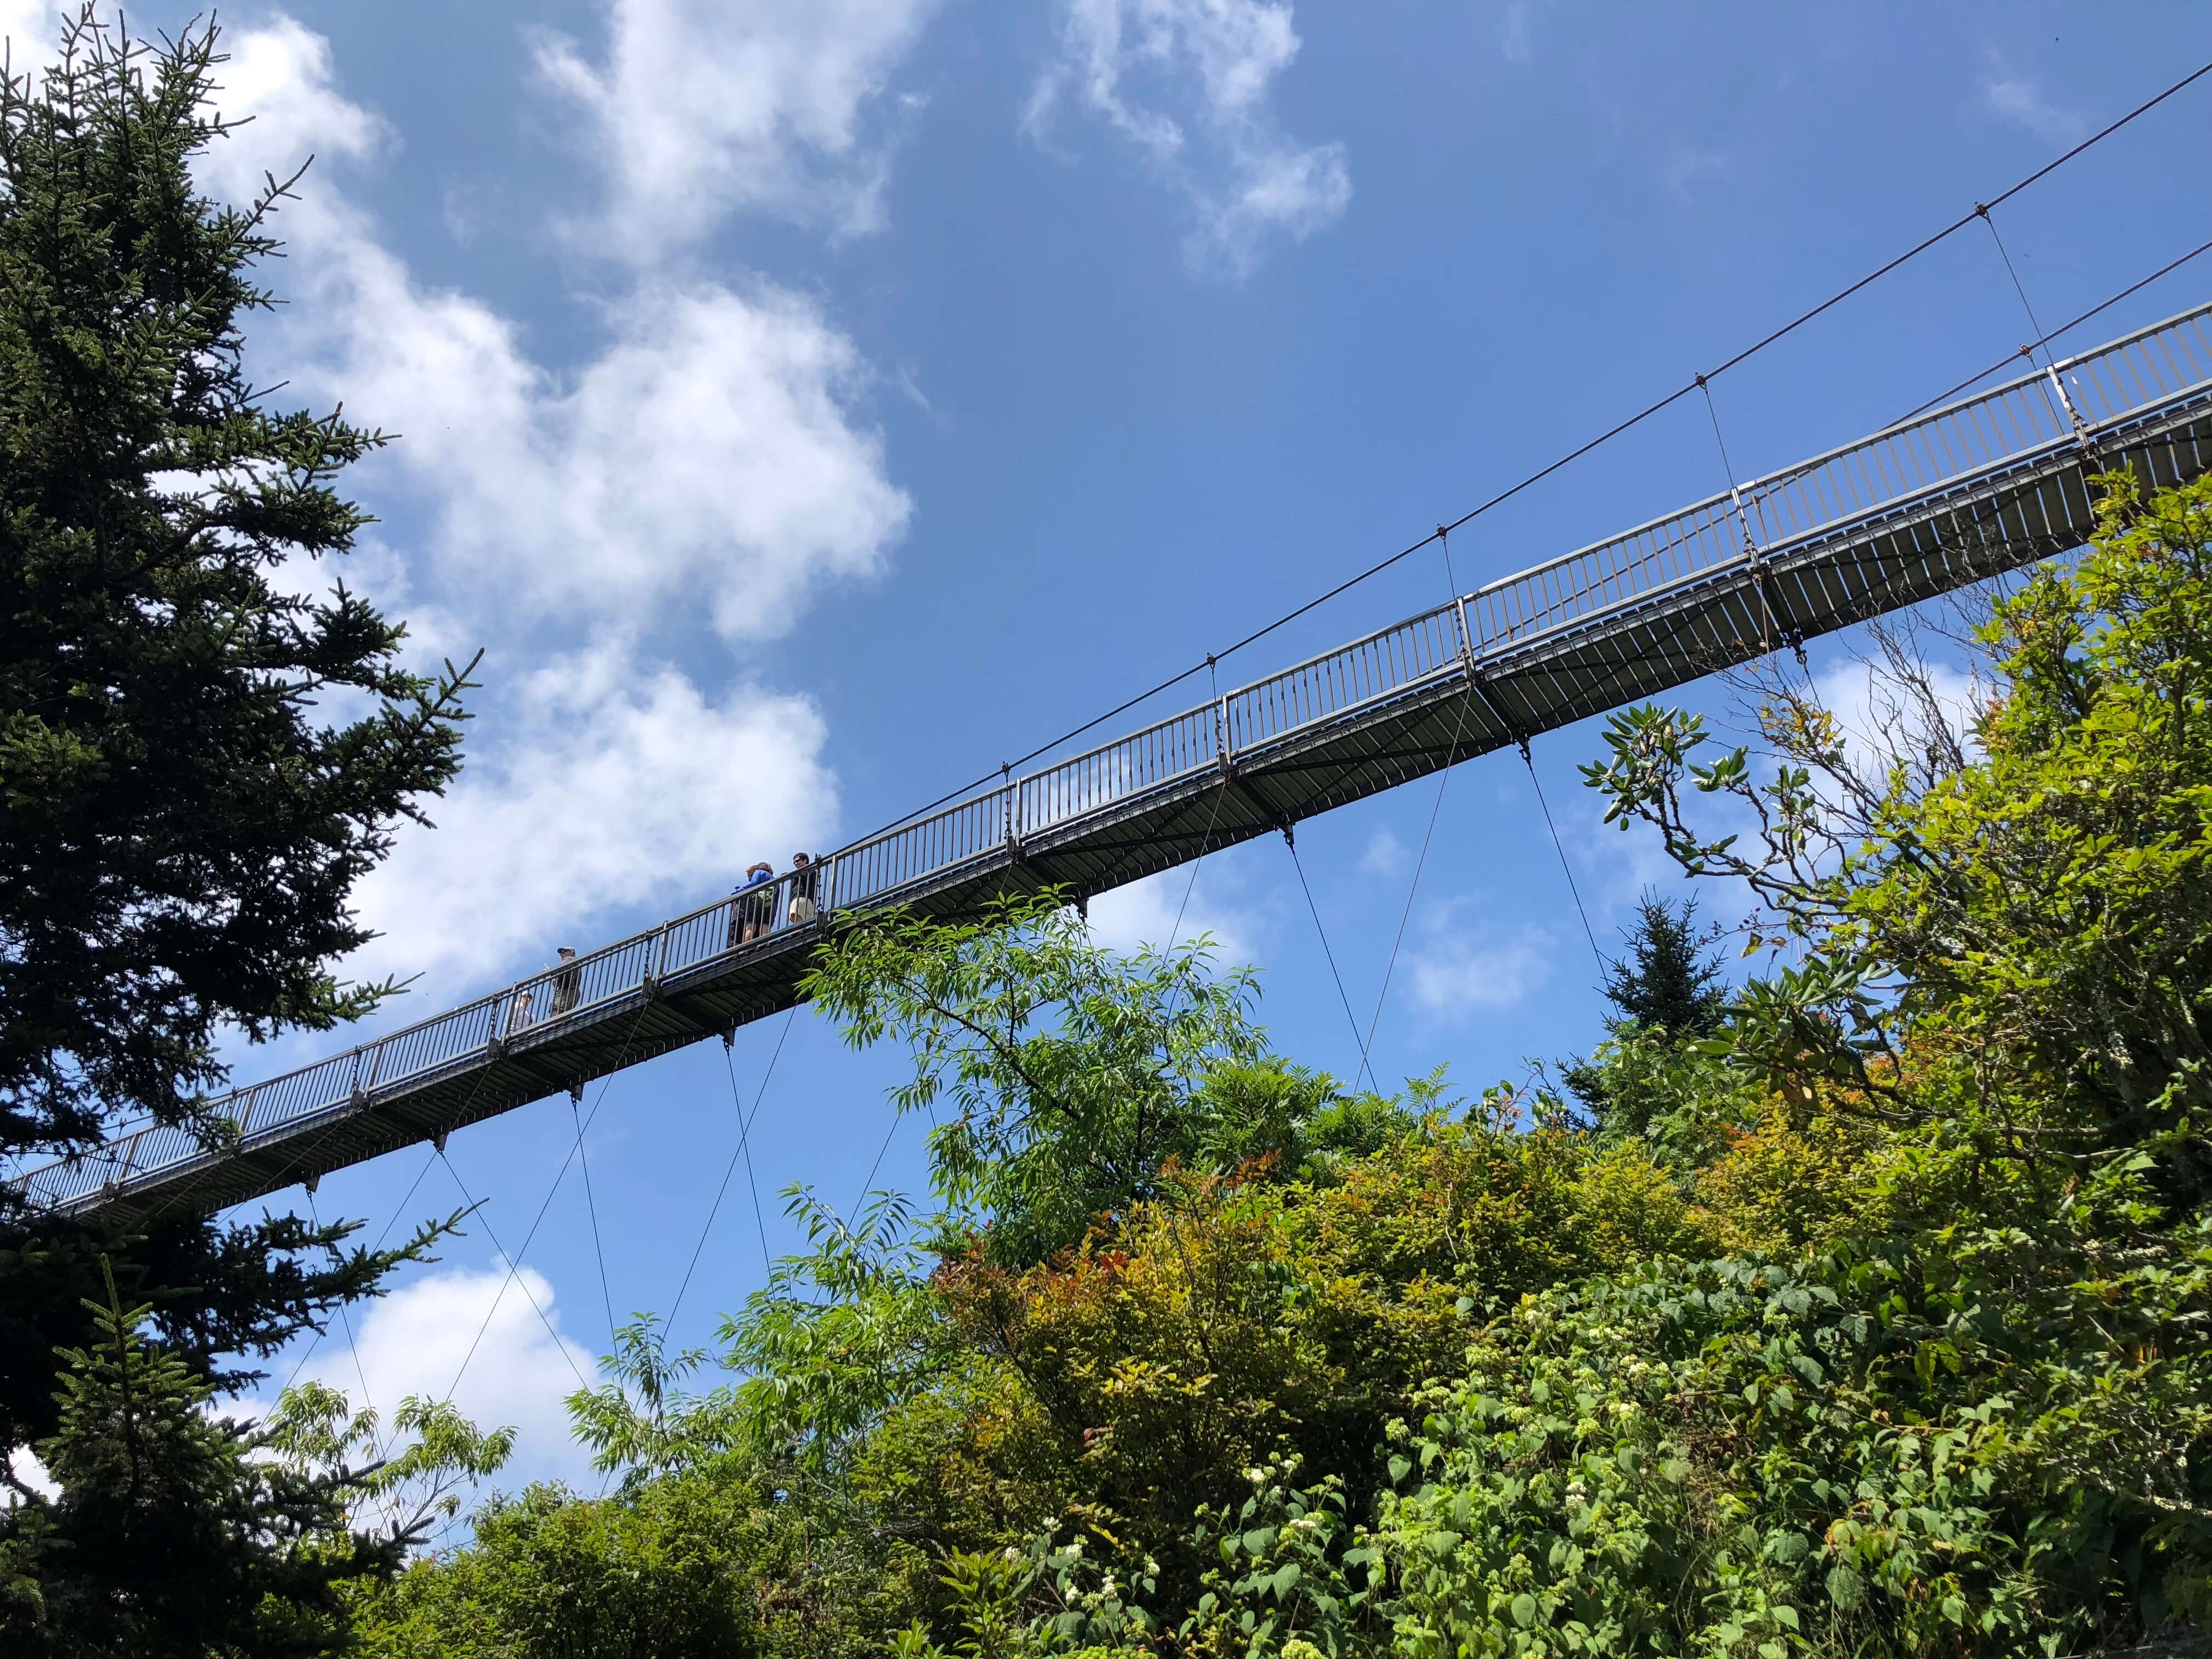 Mile High Swinging Bridge at Grandfather Mountain